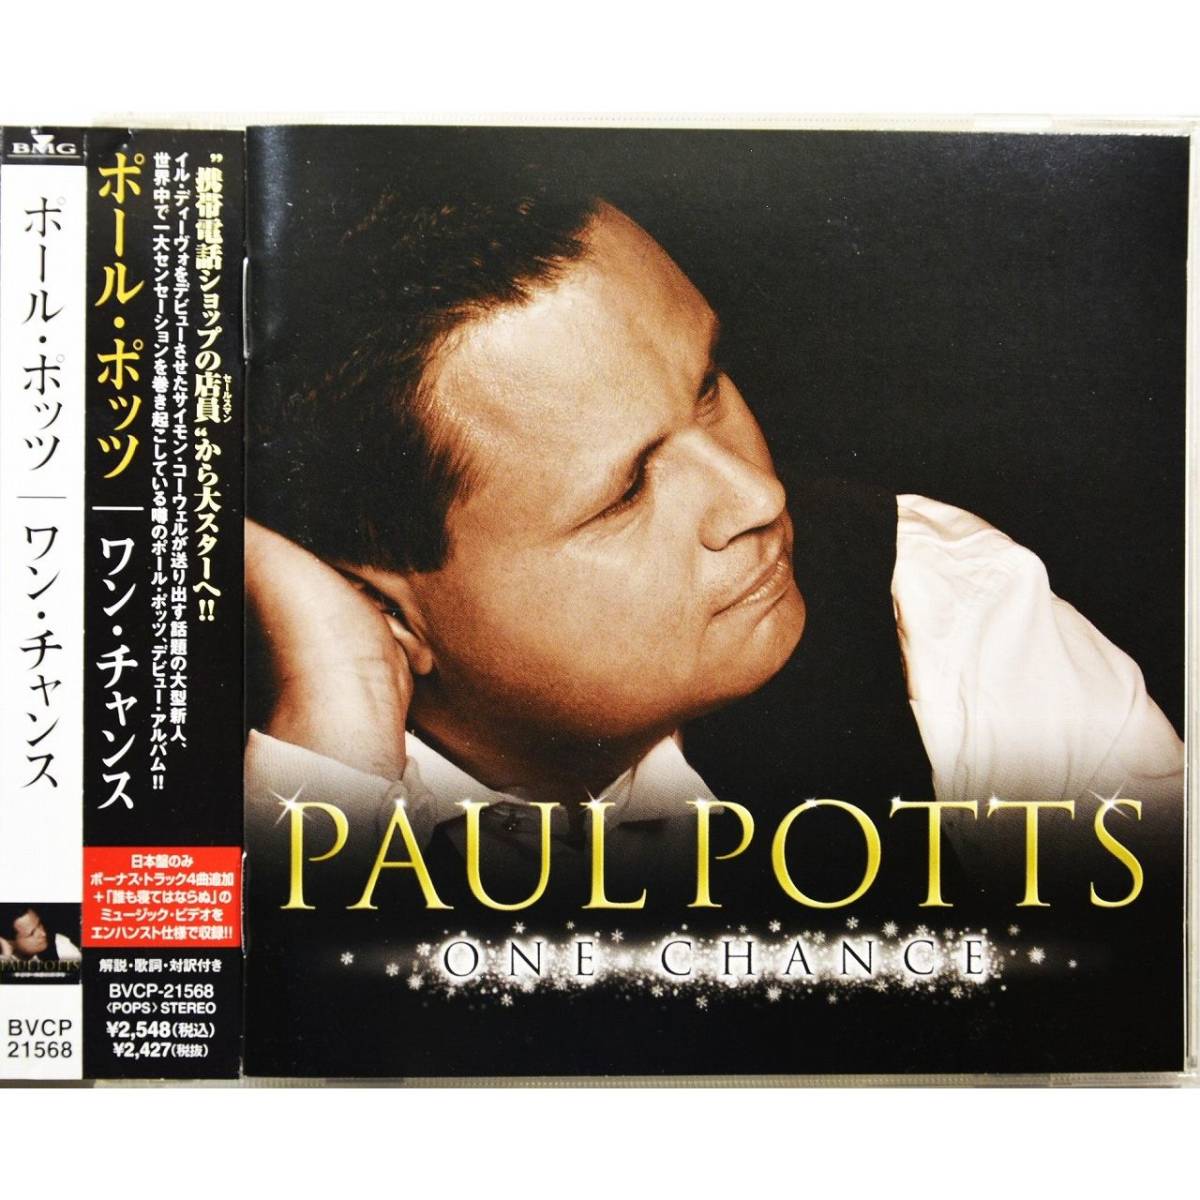 Paul Potts / One Chance ◇ ポール・ポッツ / ワン・チャンス ◇ CD-Extra仕様 / 国内盤帯付◇_画像1